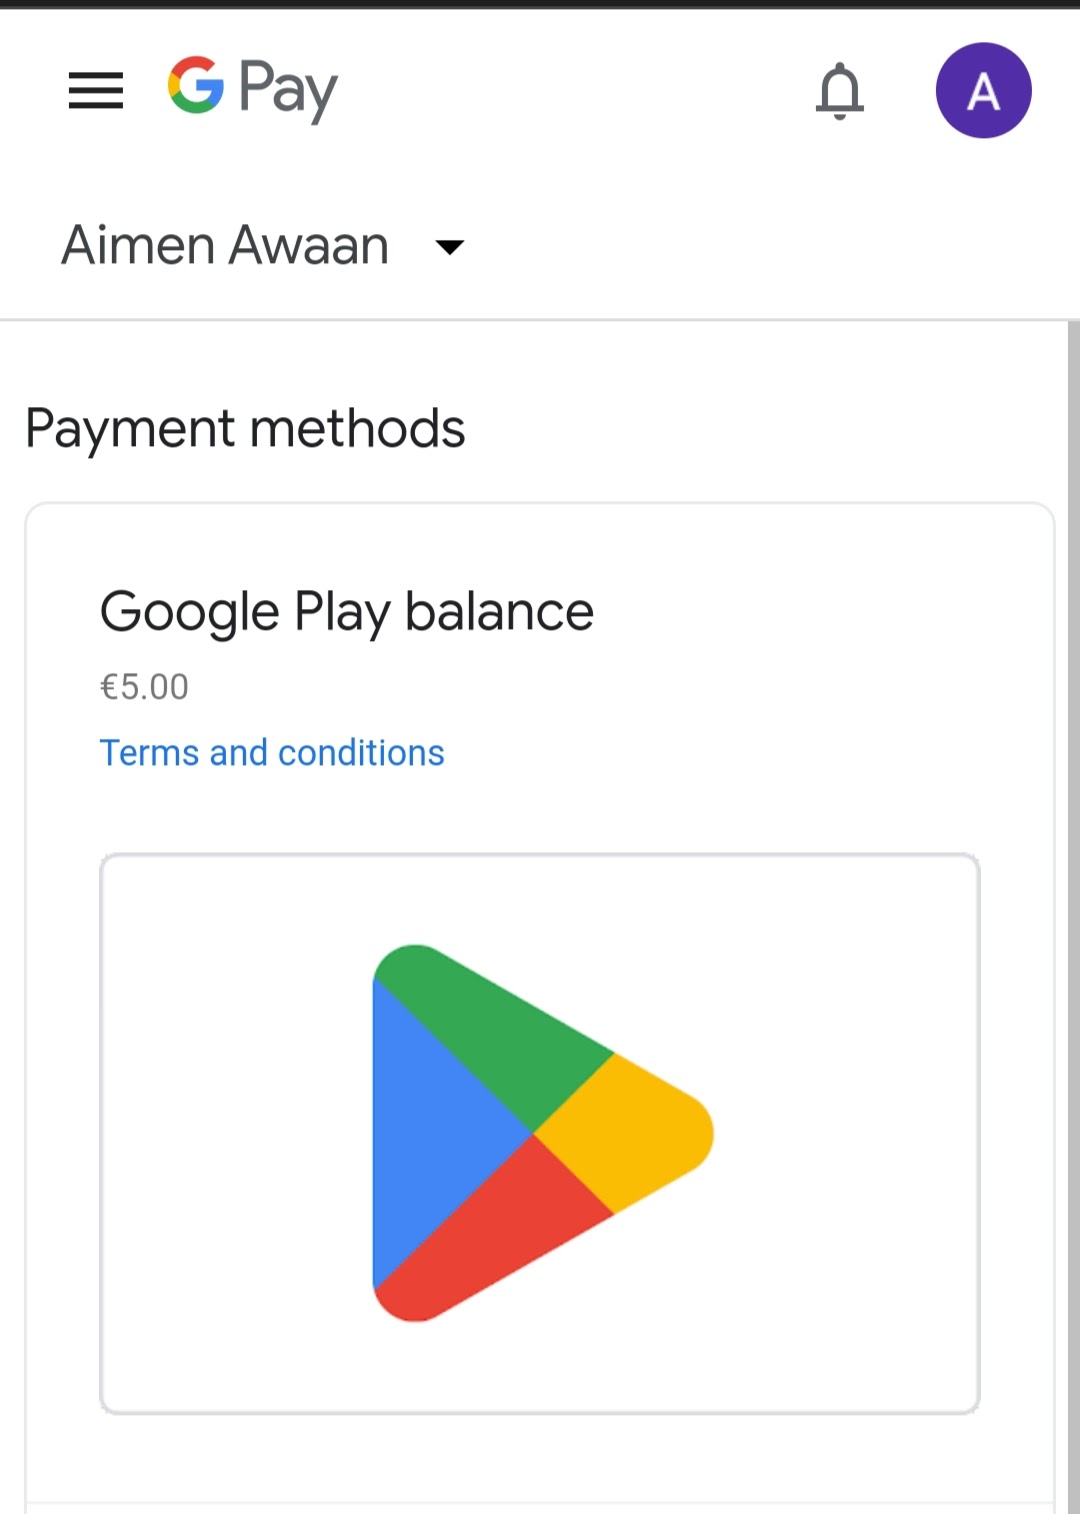 app not working - Google Play Community